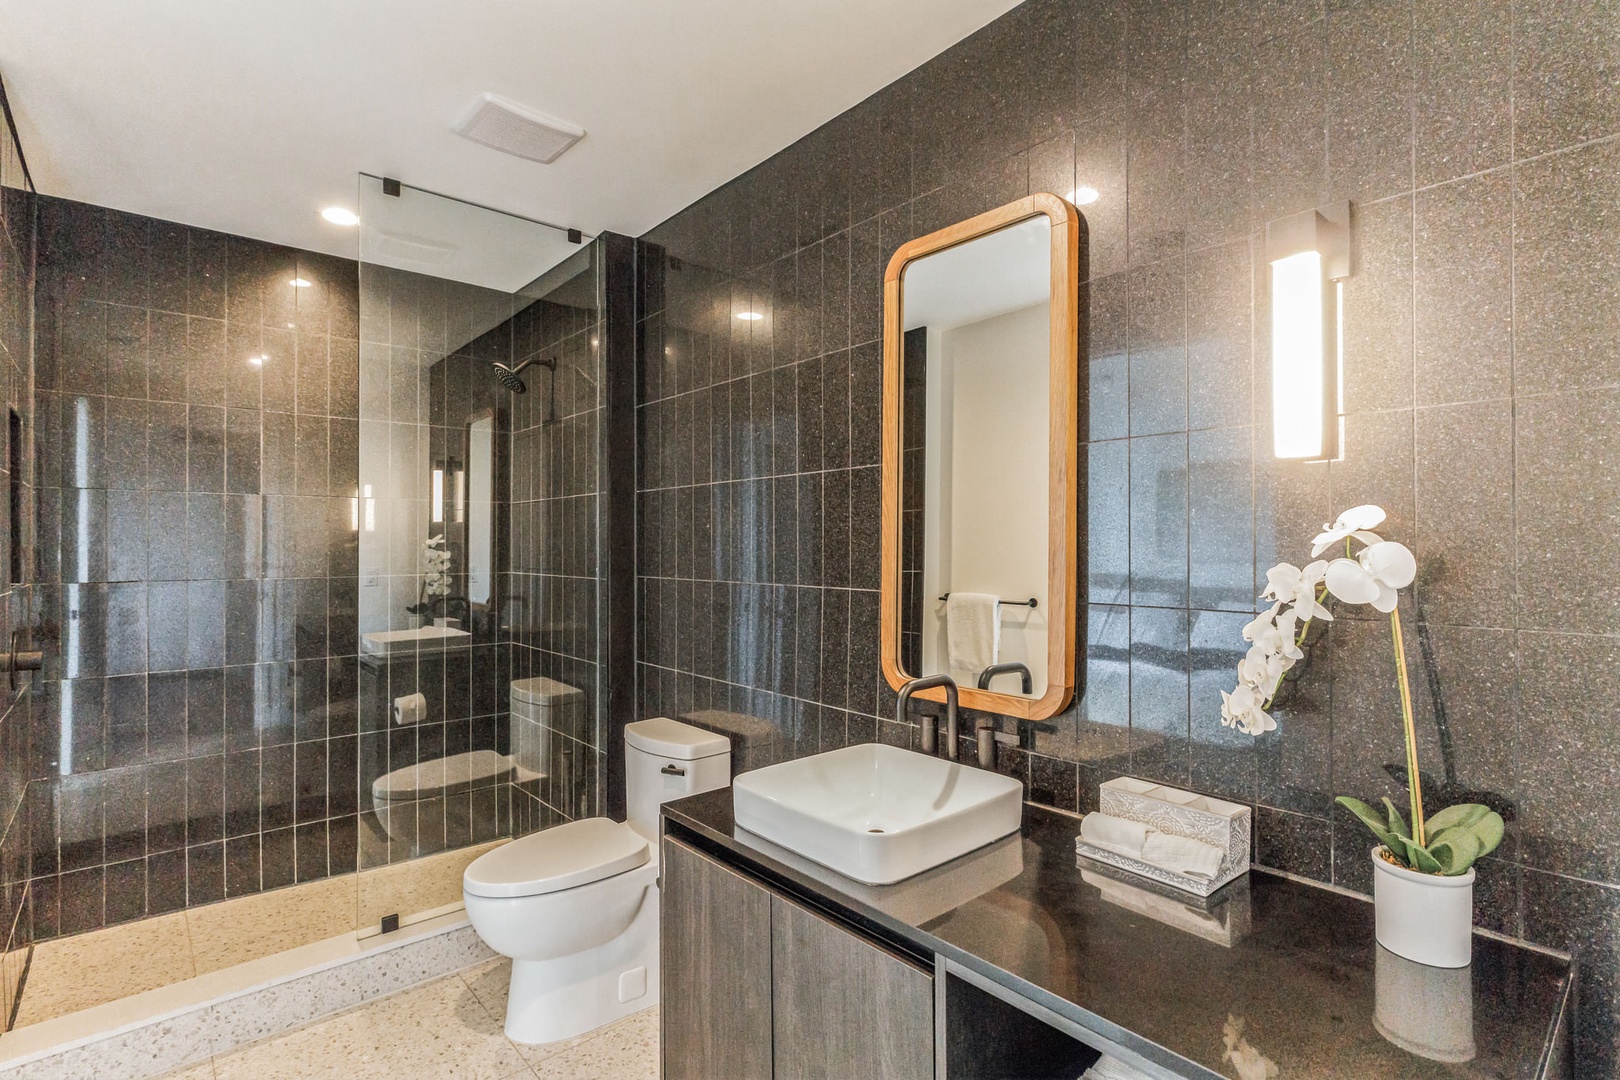 Shared en-suite bathroom with walk-in shower